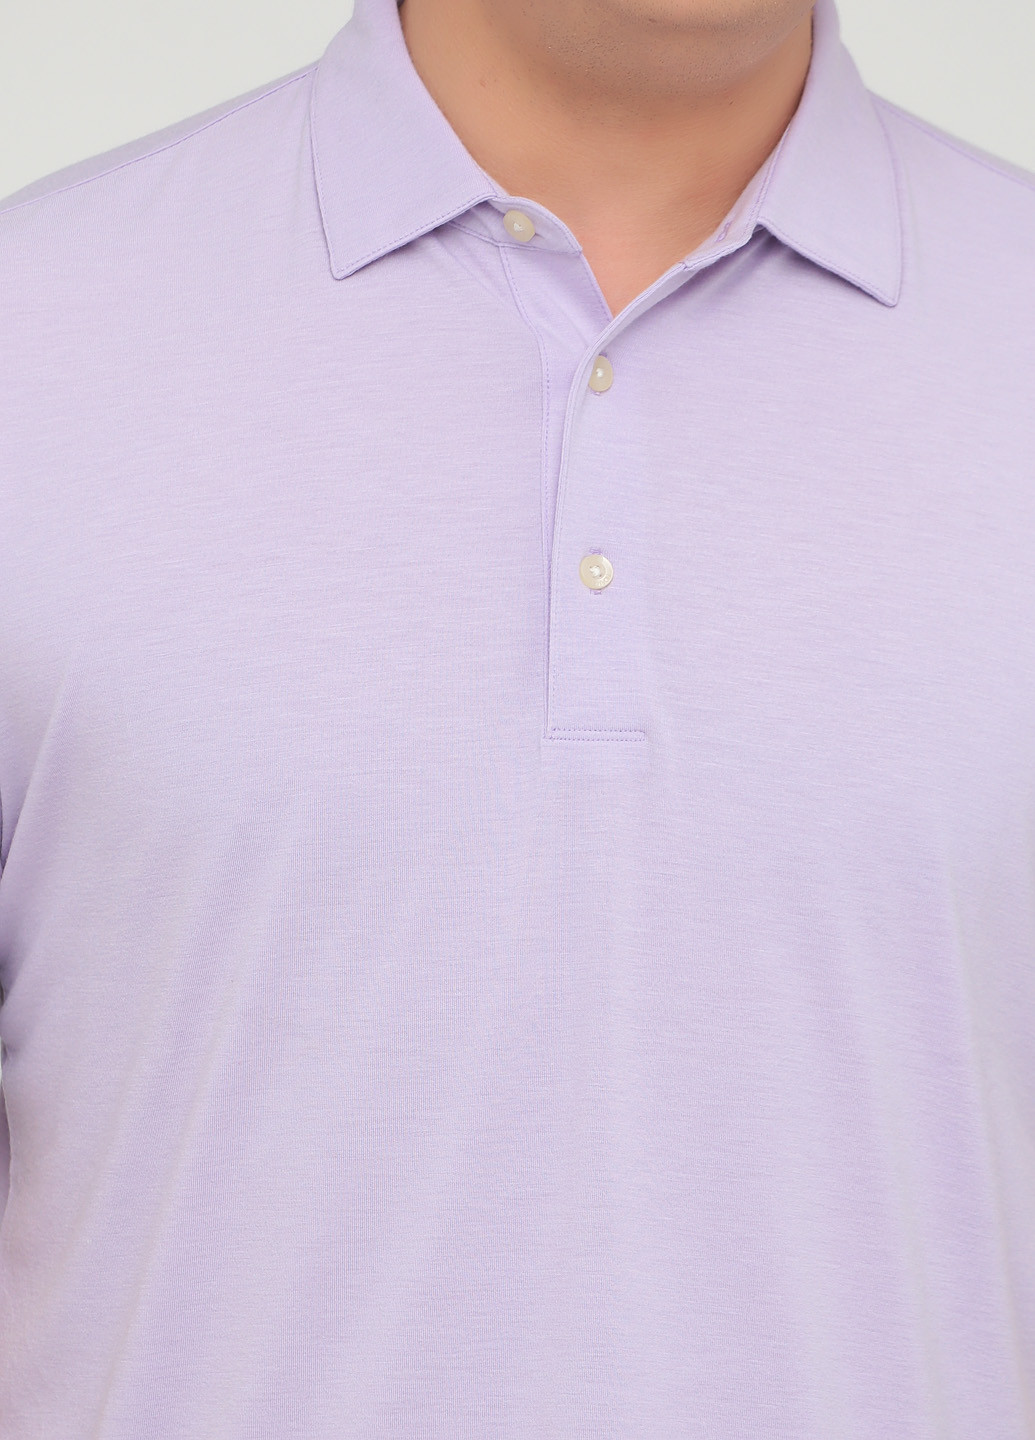 Лавандовая футболка-поло для мужчин Greg Norman меланжевая